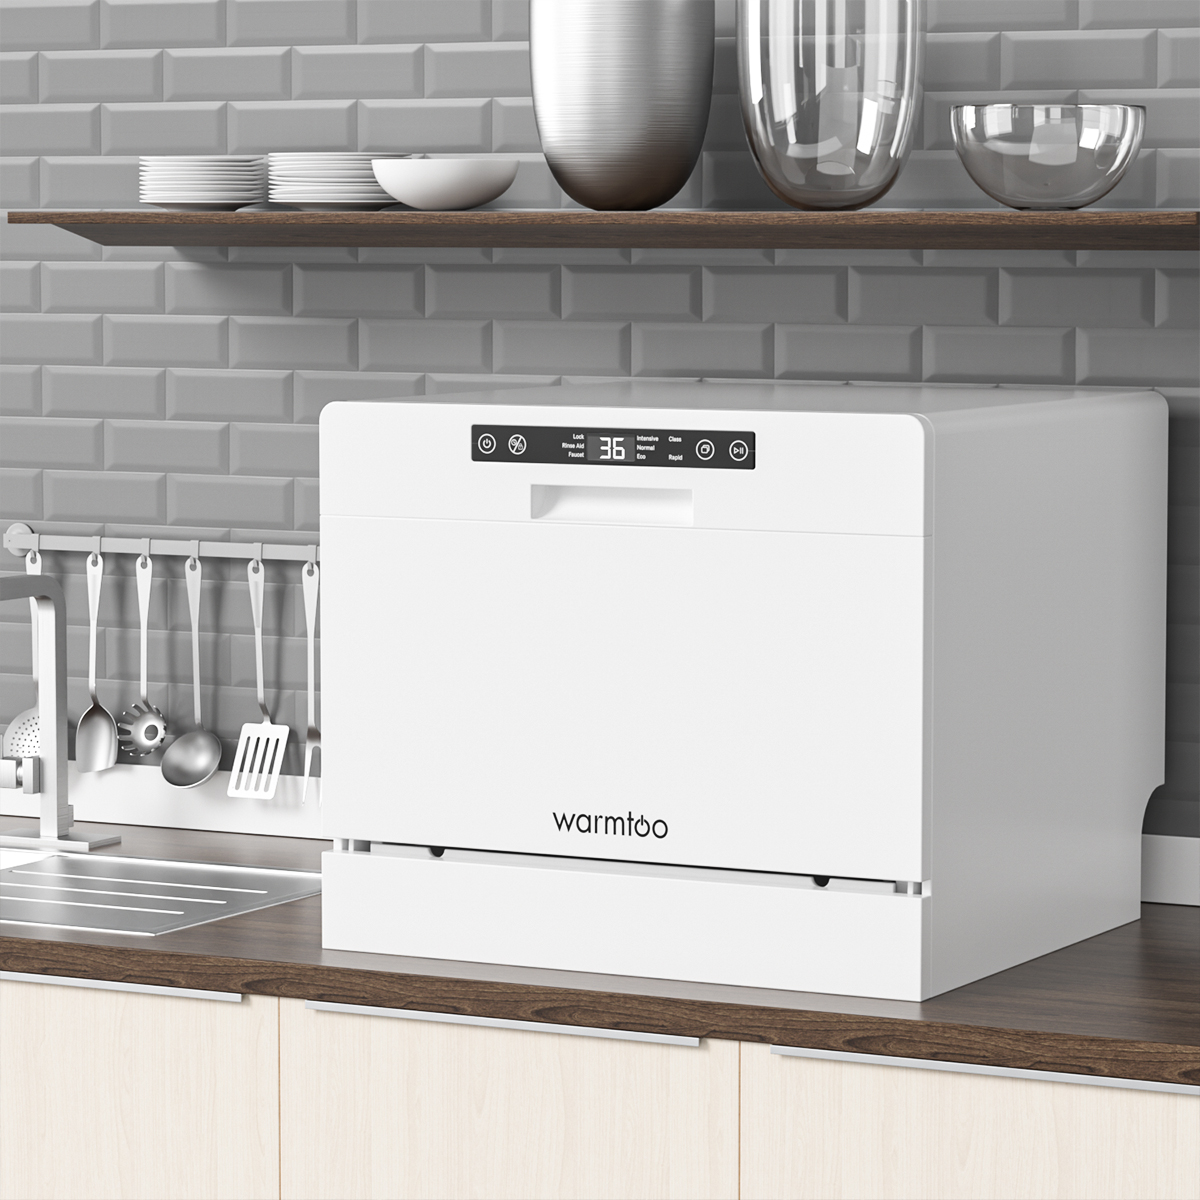 Warmto-6-Piece-Countertop-Dishwasher-Counter-Top-Dishwasher-Machine-Delay-Start-LED-Display-5-Washin-1931541-18